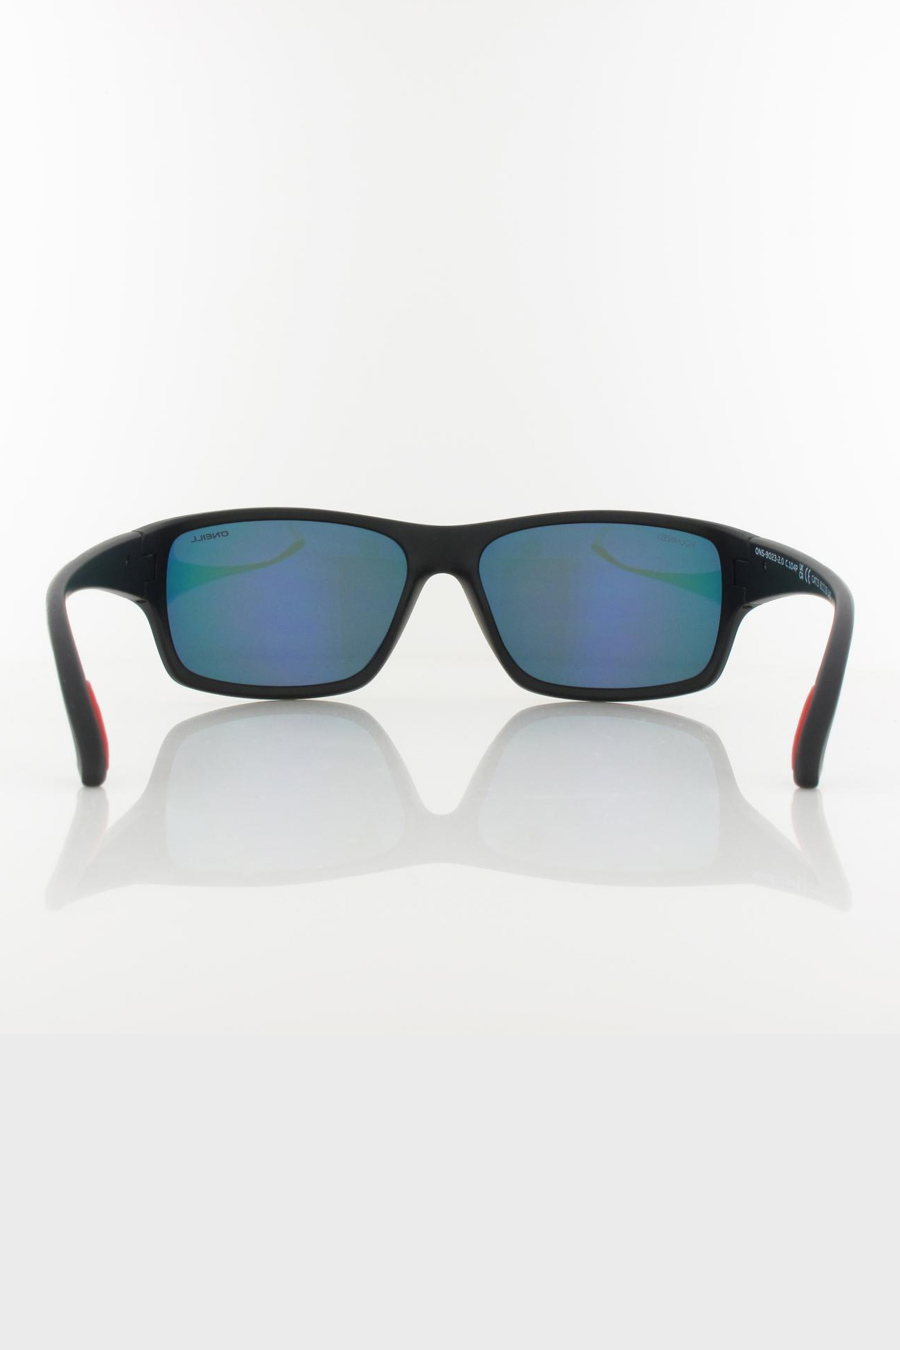 Солнечные очки ONEILL ONS-9023-20-104P